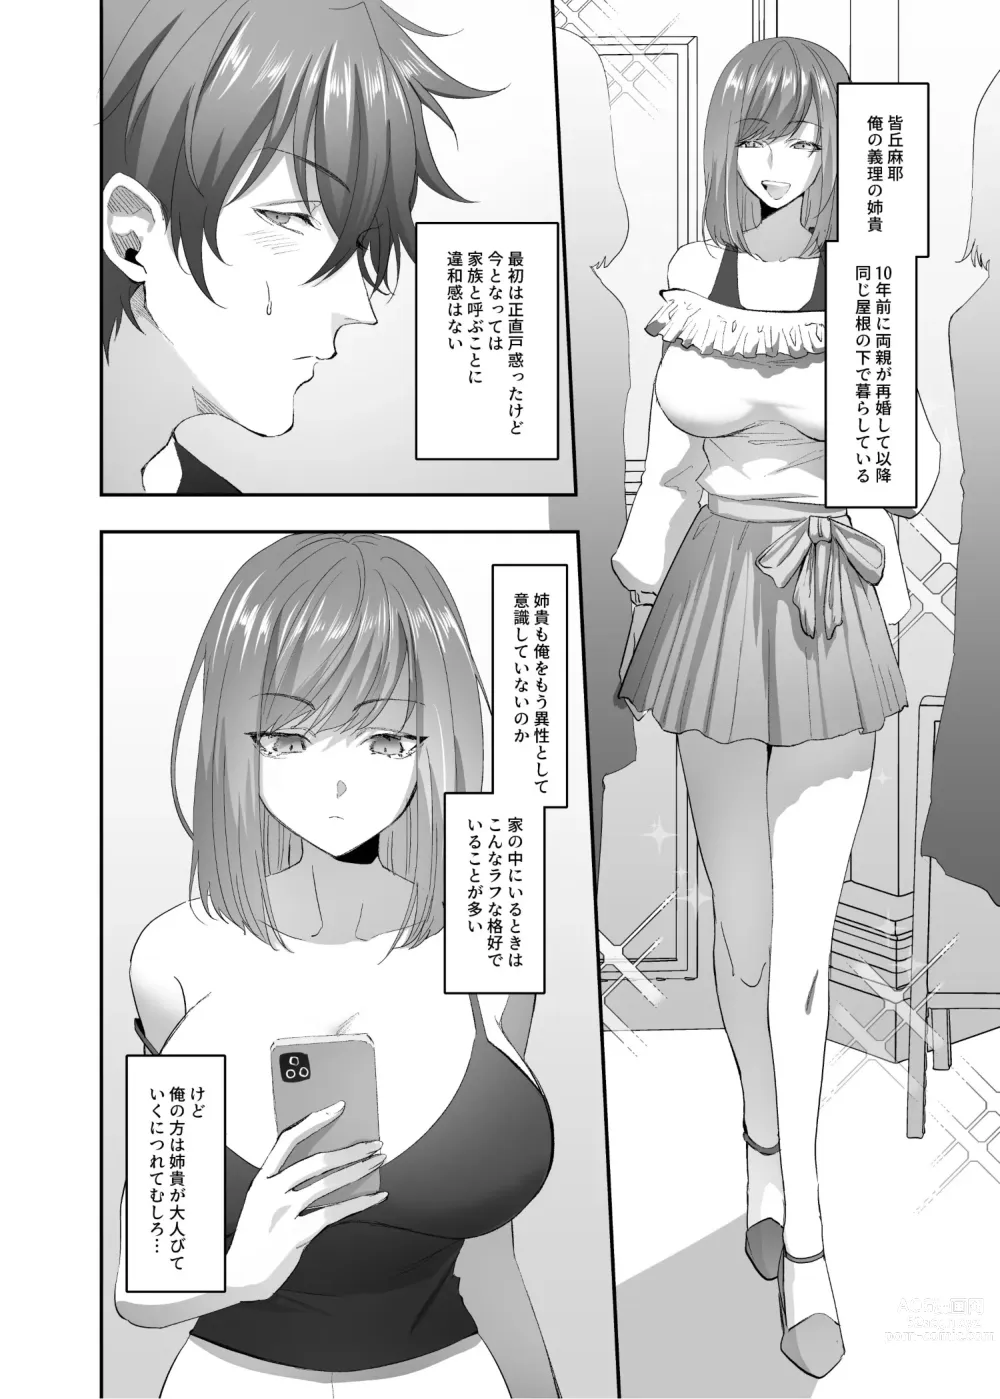 Page 5 of doujinshi Hyoui no Omajinai